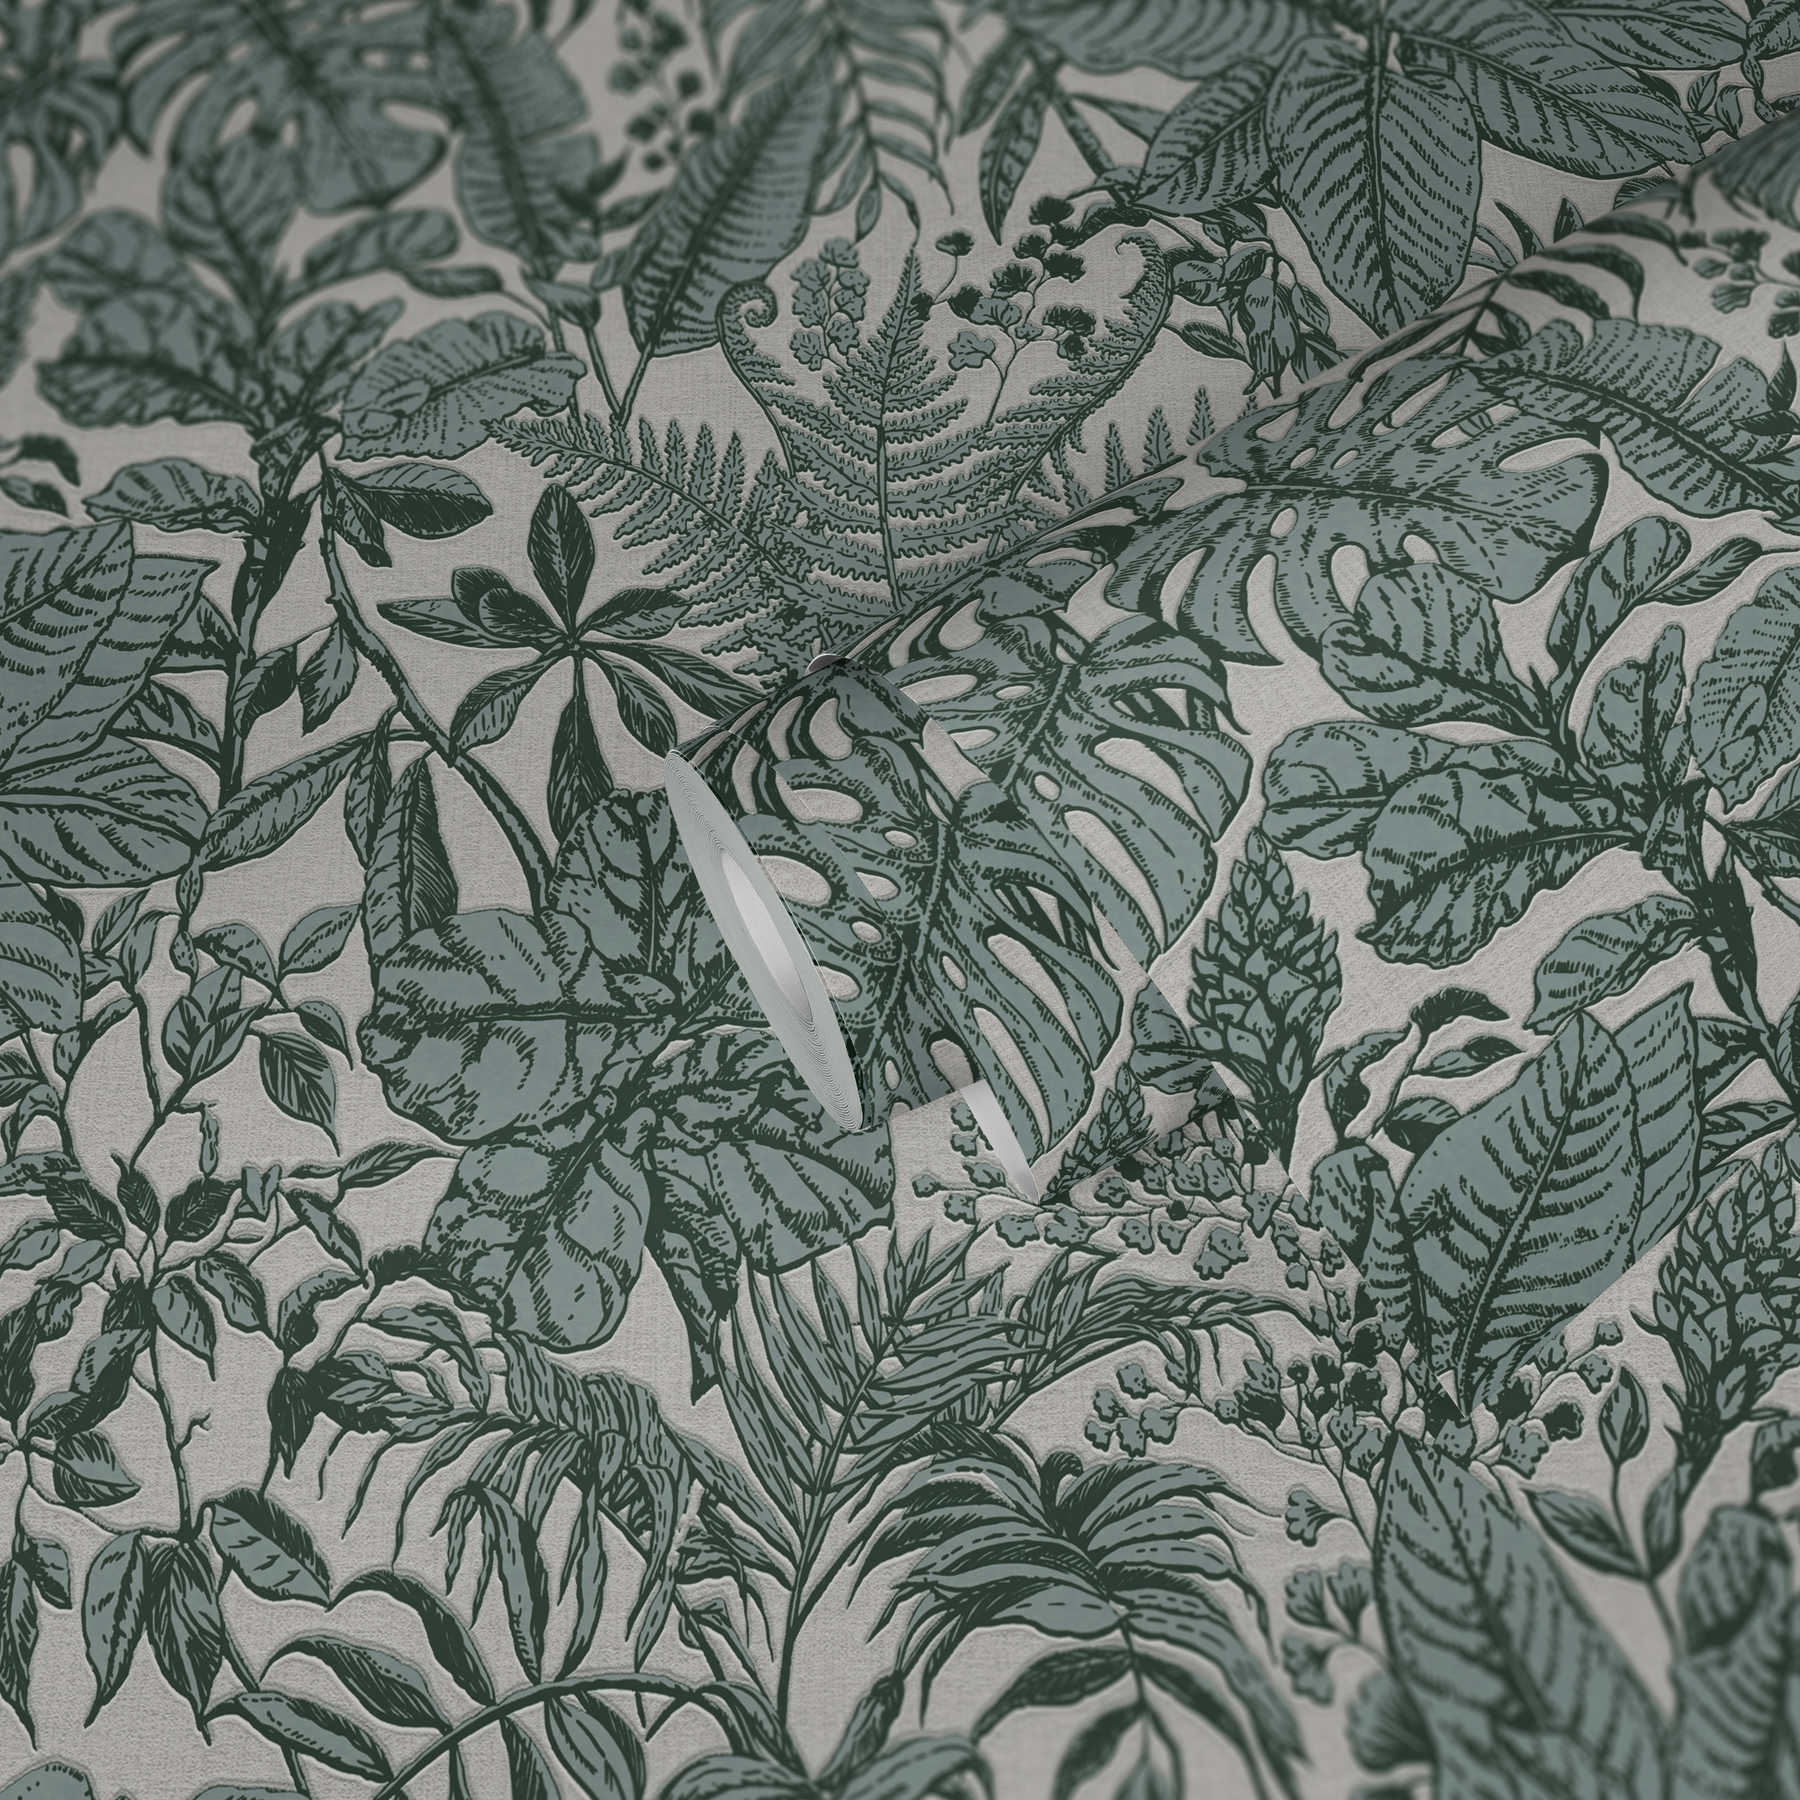             Wallpaper jungle leaves, monstera & ferns - green, white, grey
        